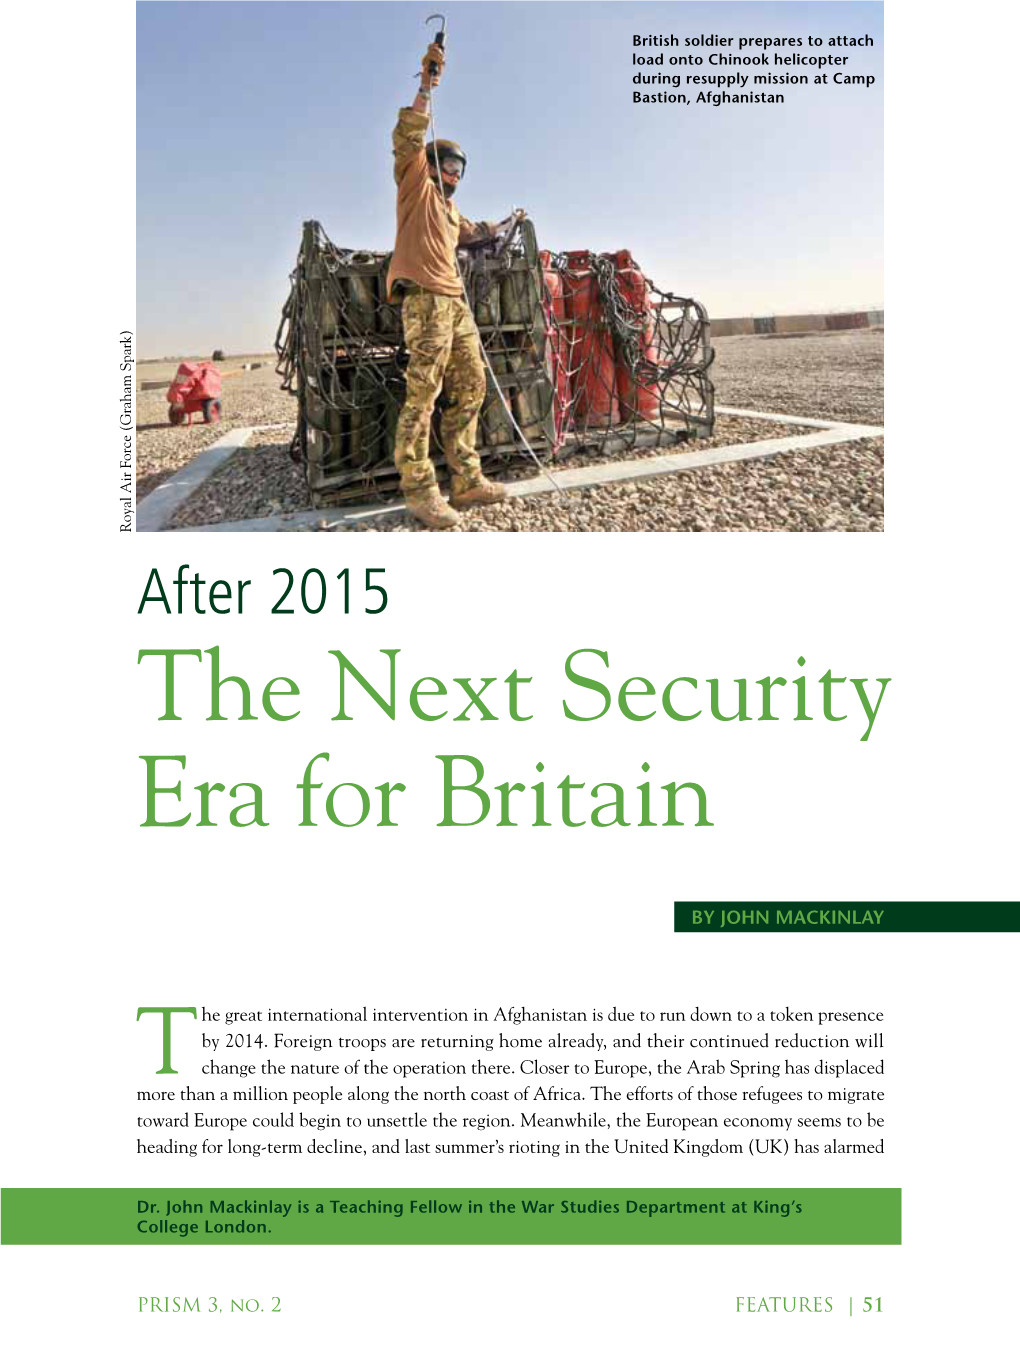 The Next Security Era for Britain